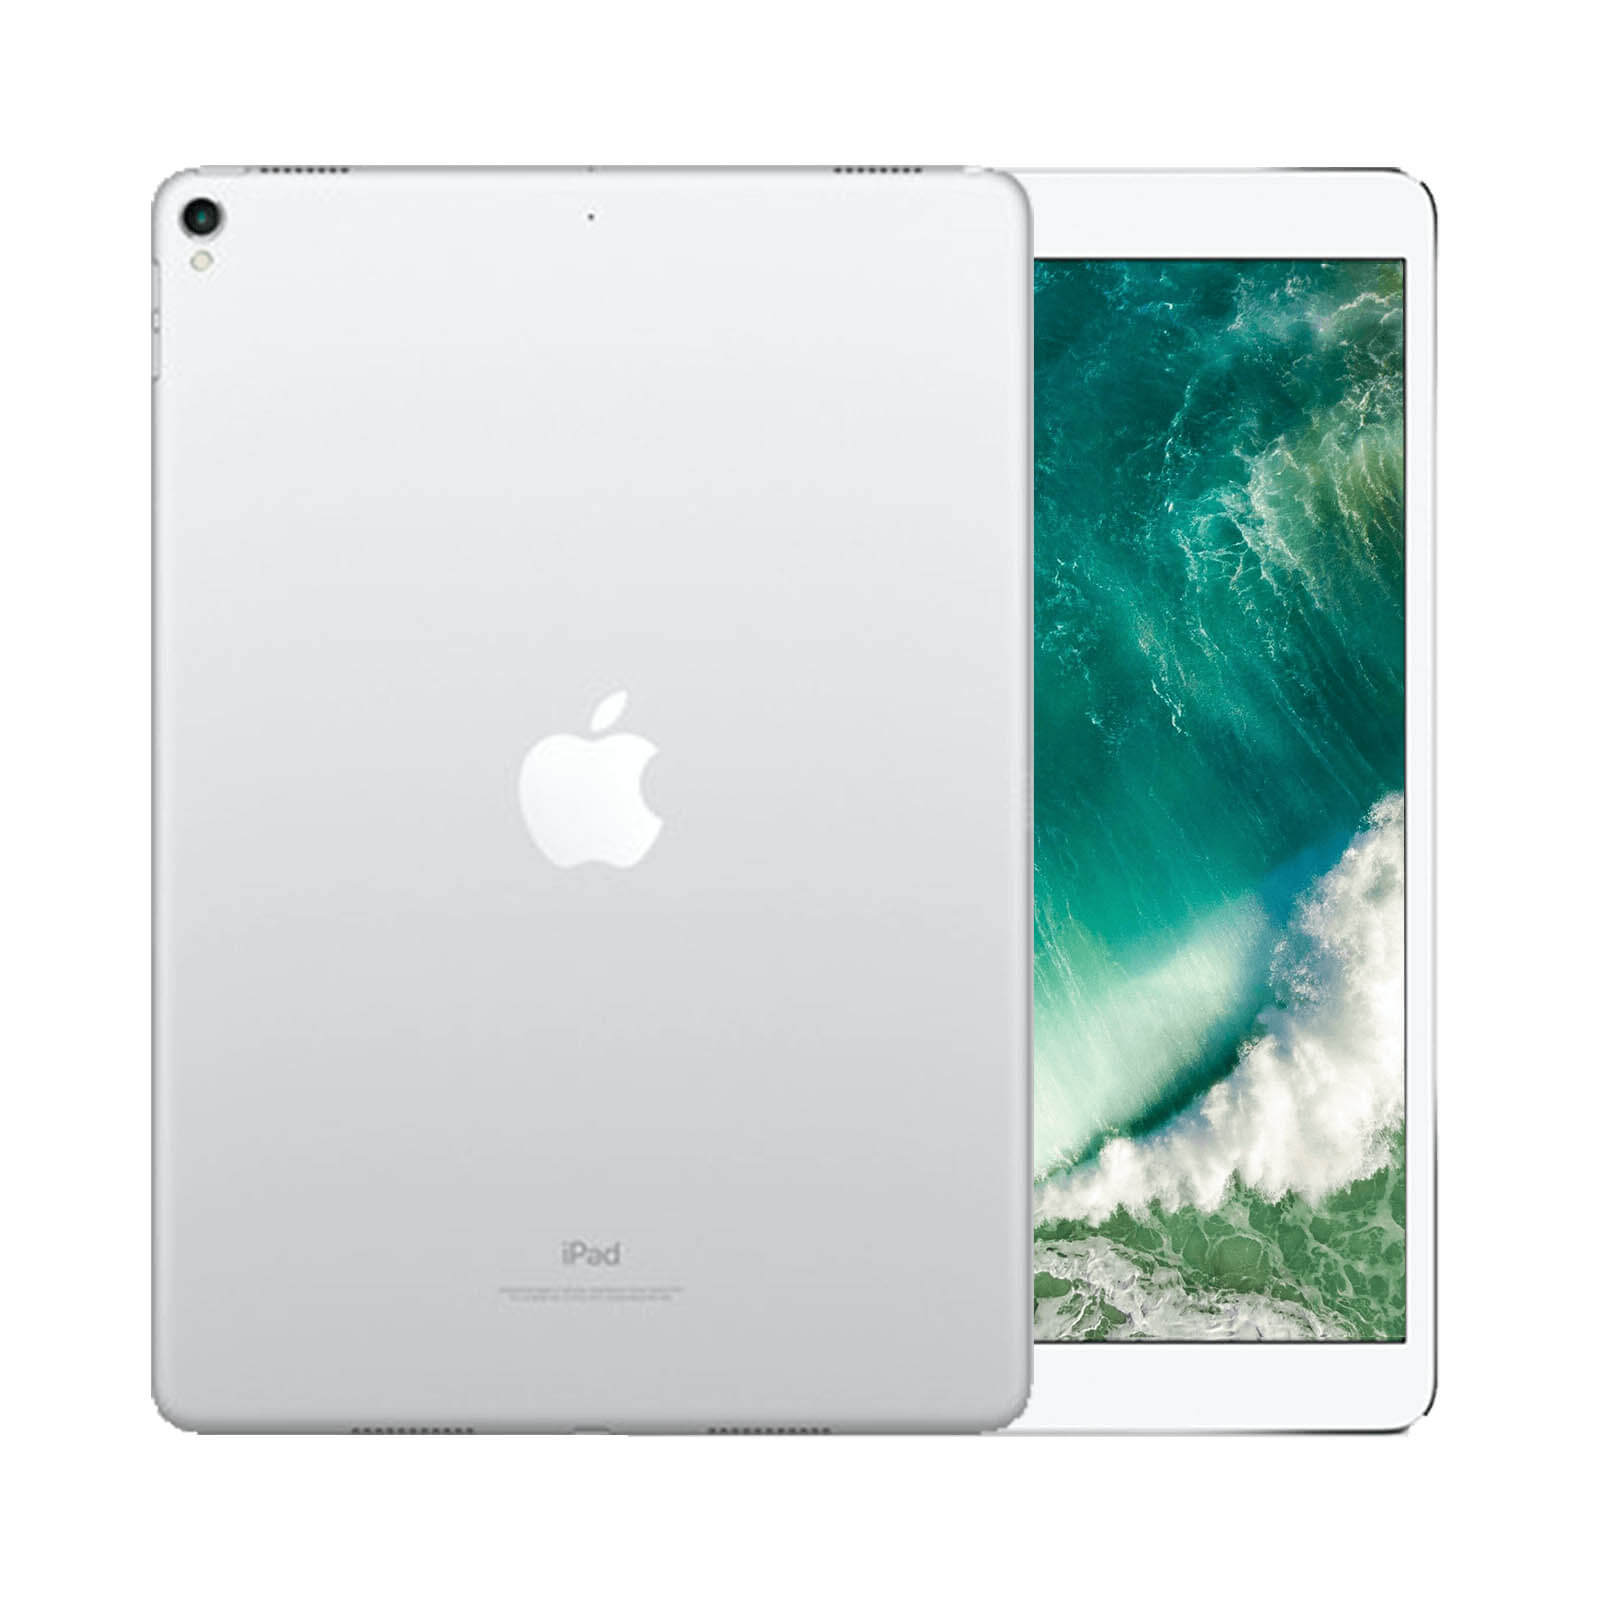 iPad Pro 11 Inch 64GB Space Grey Very Good - Unlocked 64GB Space Grey Very Good